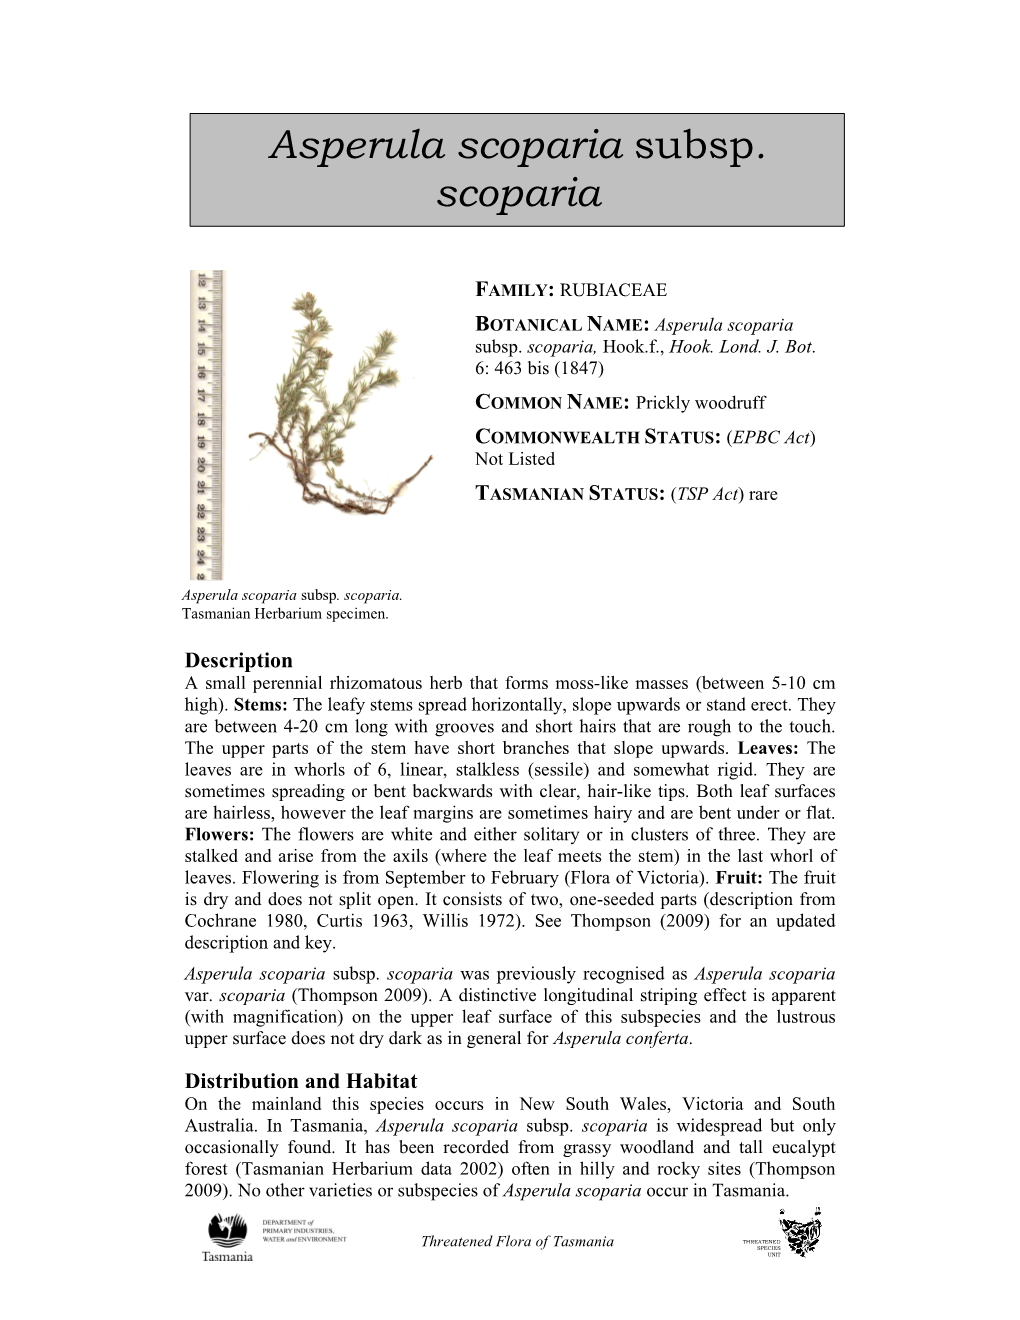 Asperula Scoparia Subsp. Scoparia, Hook.F., Hook